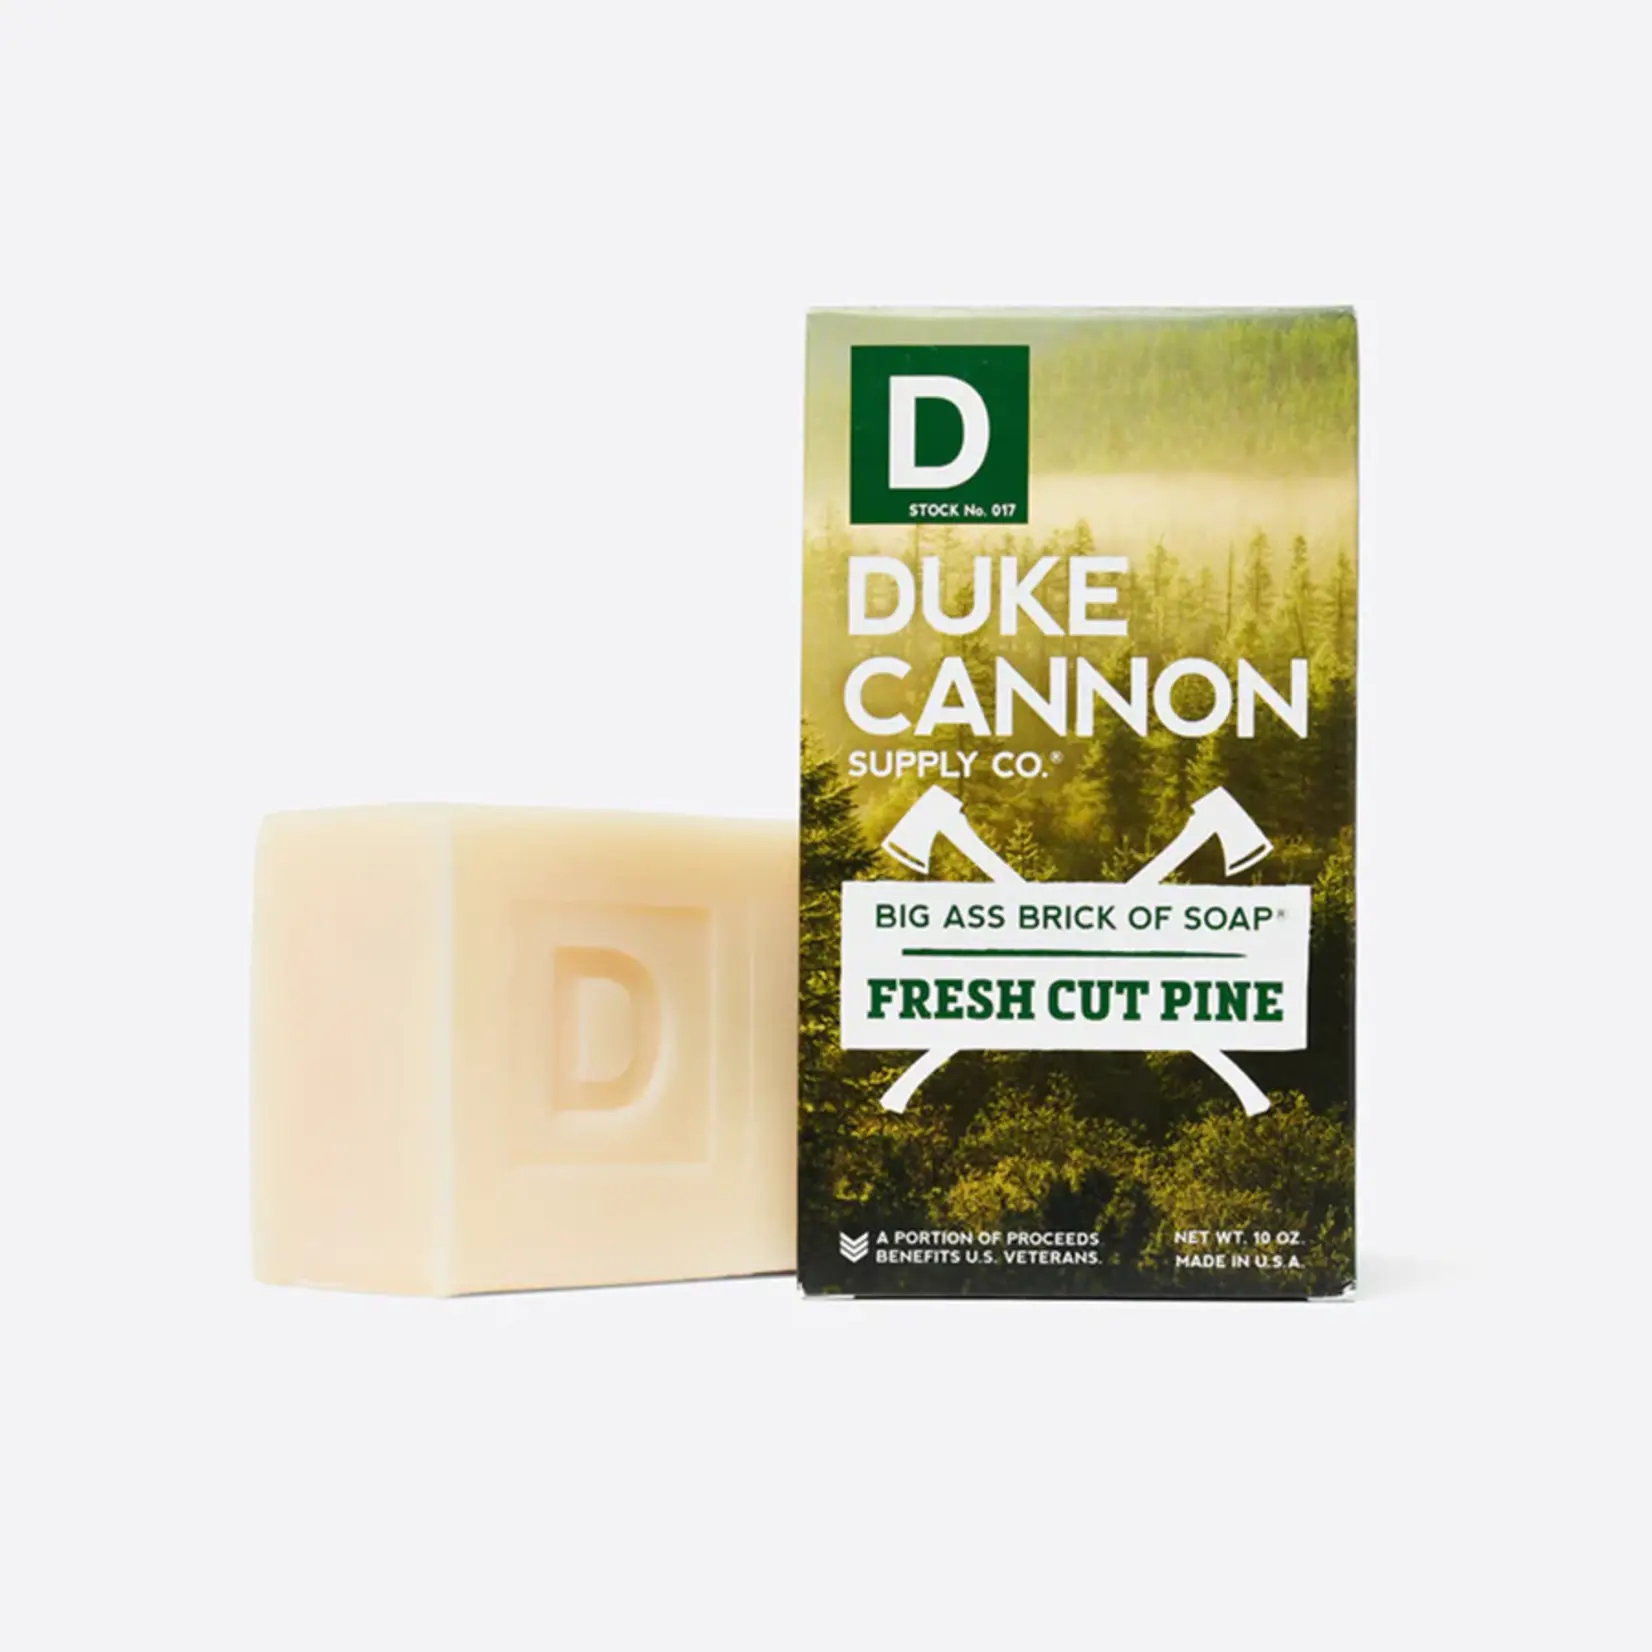 Duke Cannon Supply Co. Duke Cannon Big Ass Brick of Soap